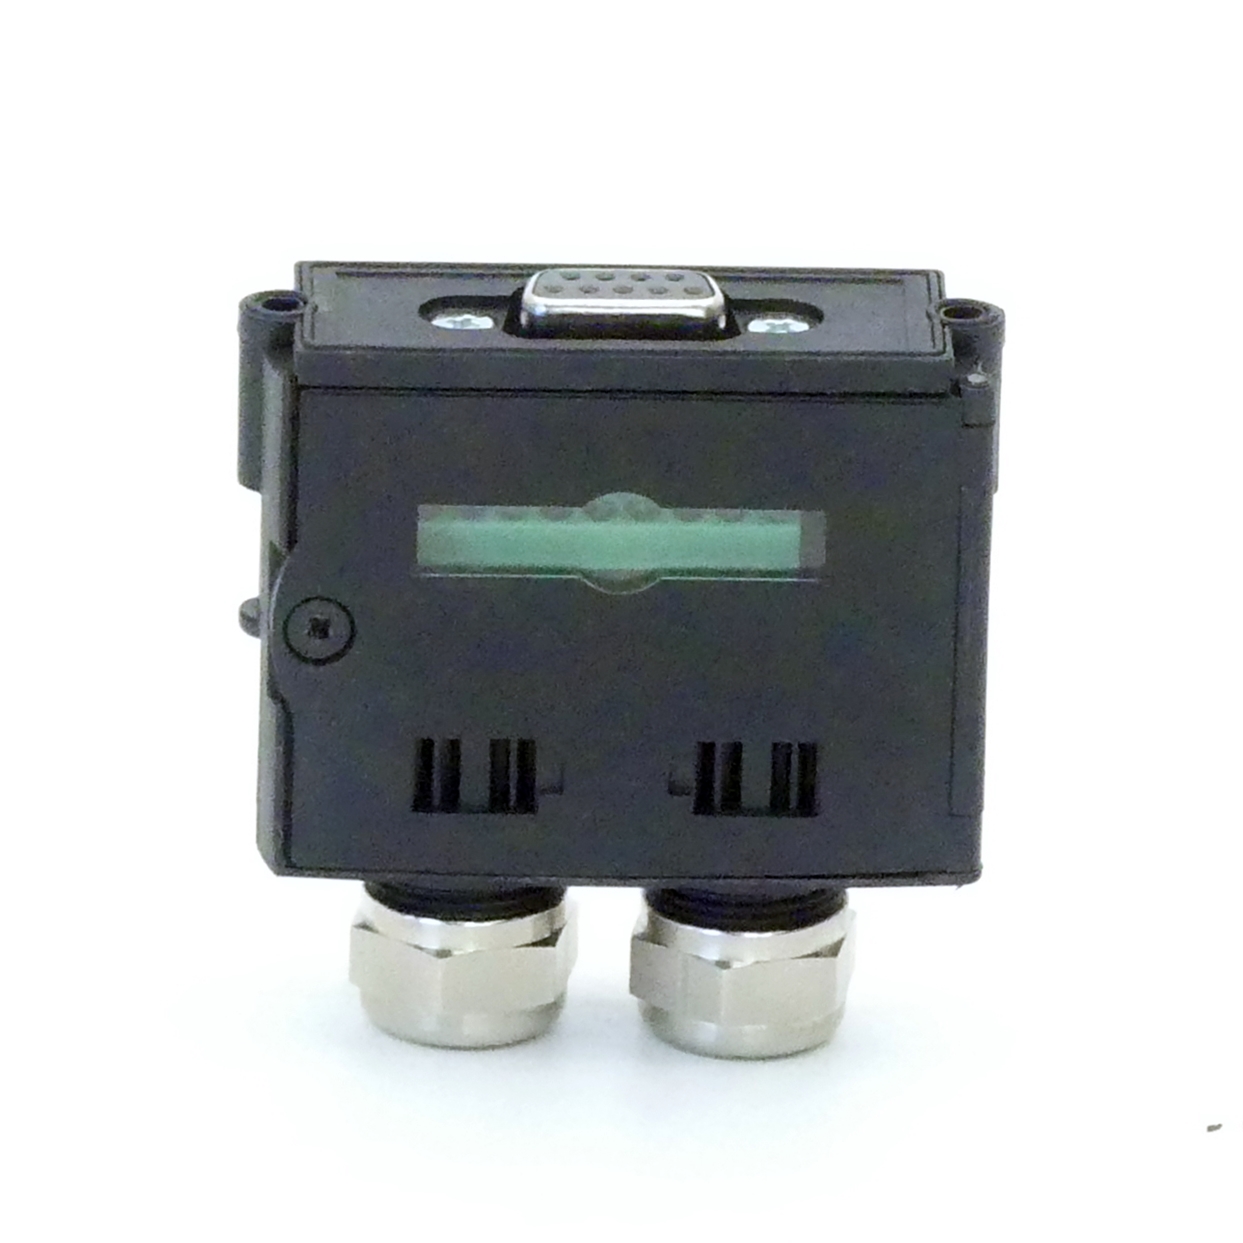 Multi-pin plug socket NECA-S1G9-P9-MP1 